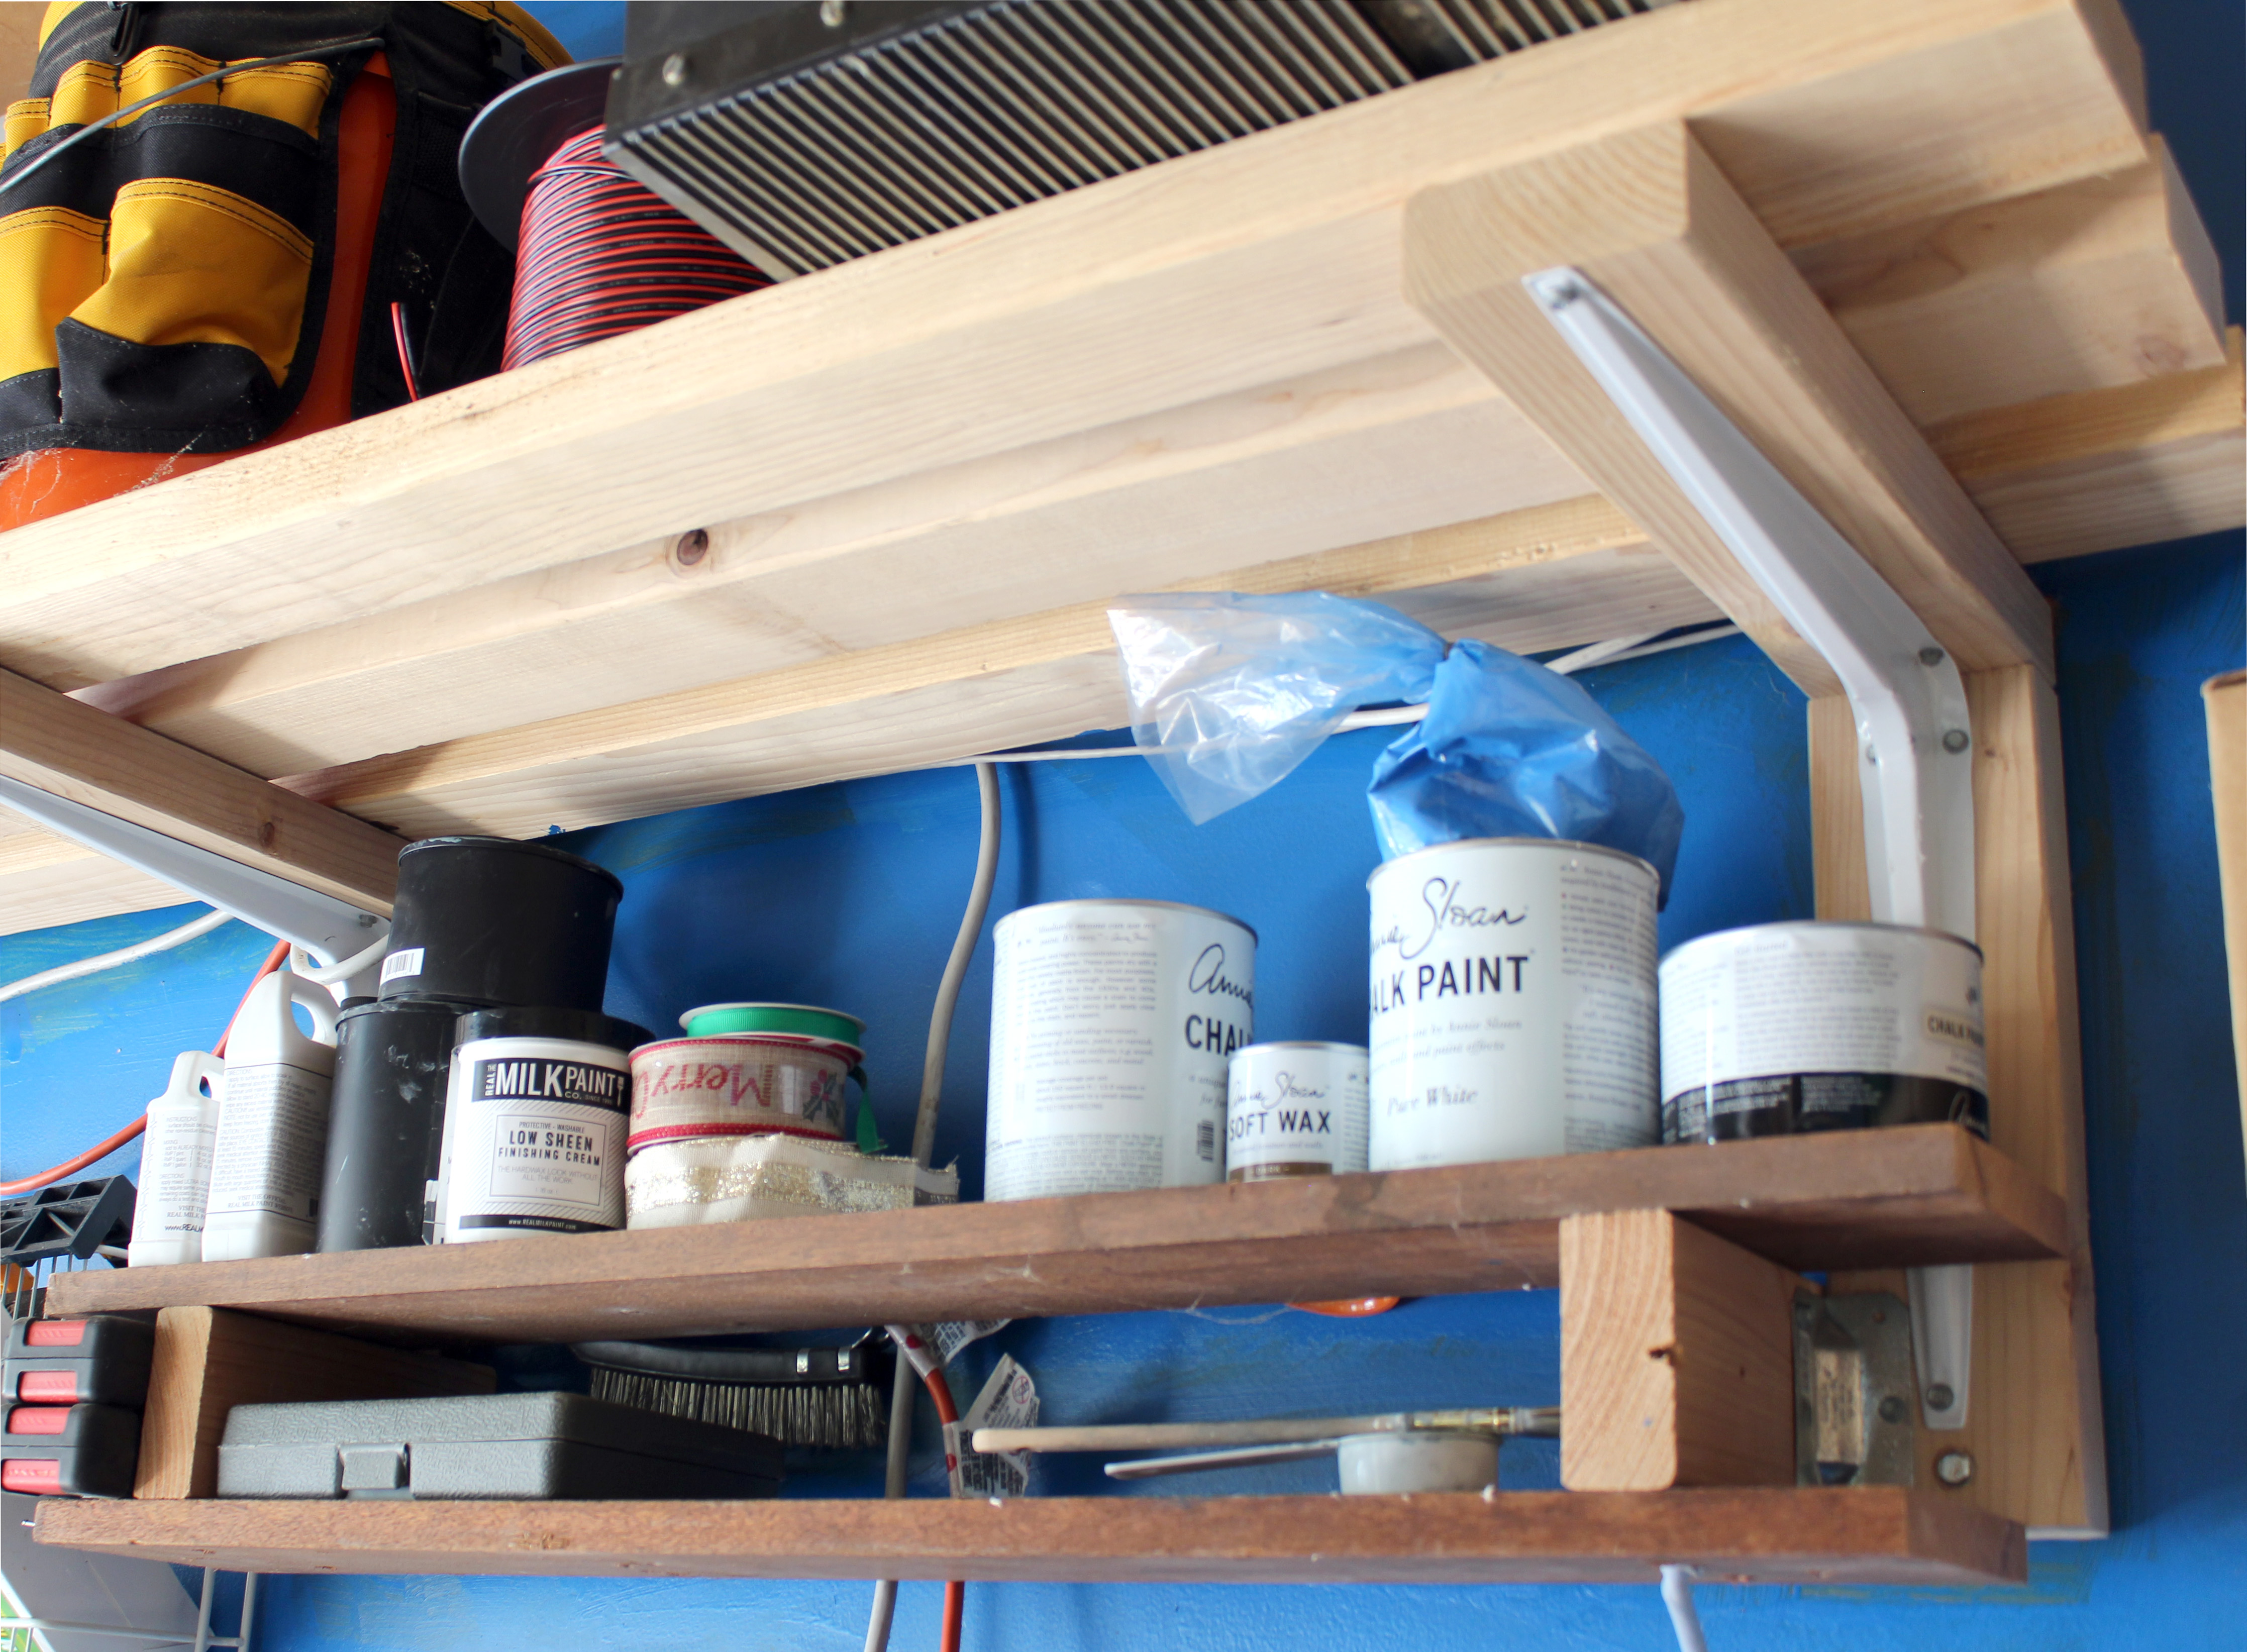 DIY garage organization tips and tricks - lots of shelves